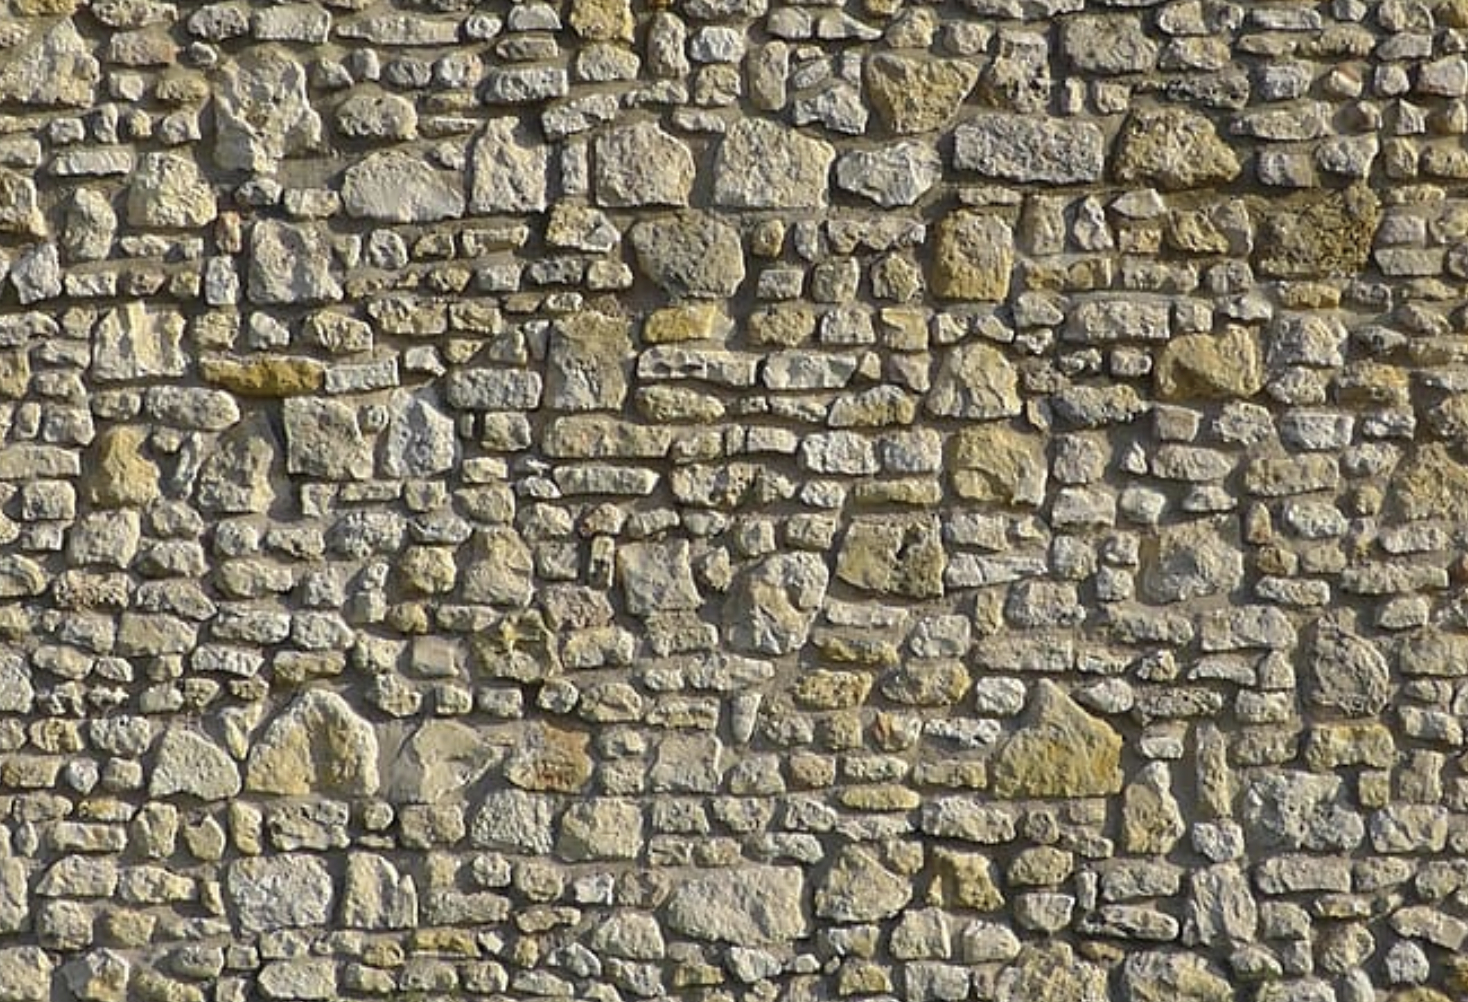 this image shows stone masonry in Upland, California